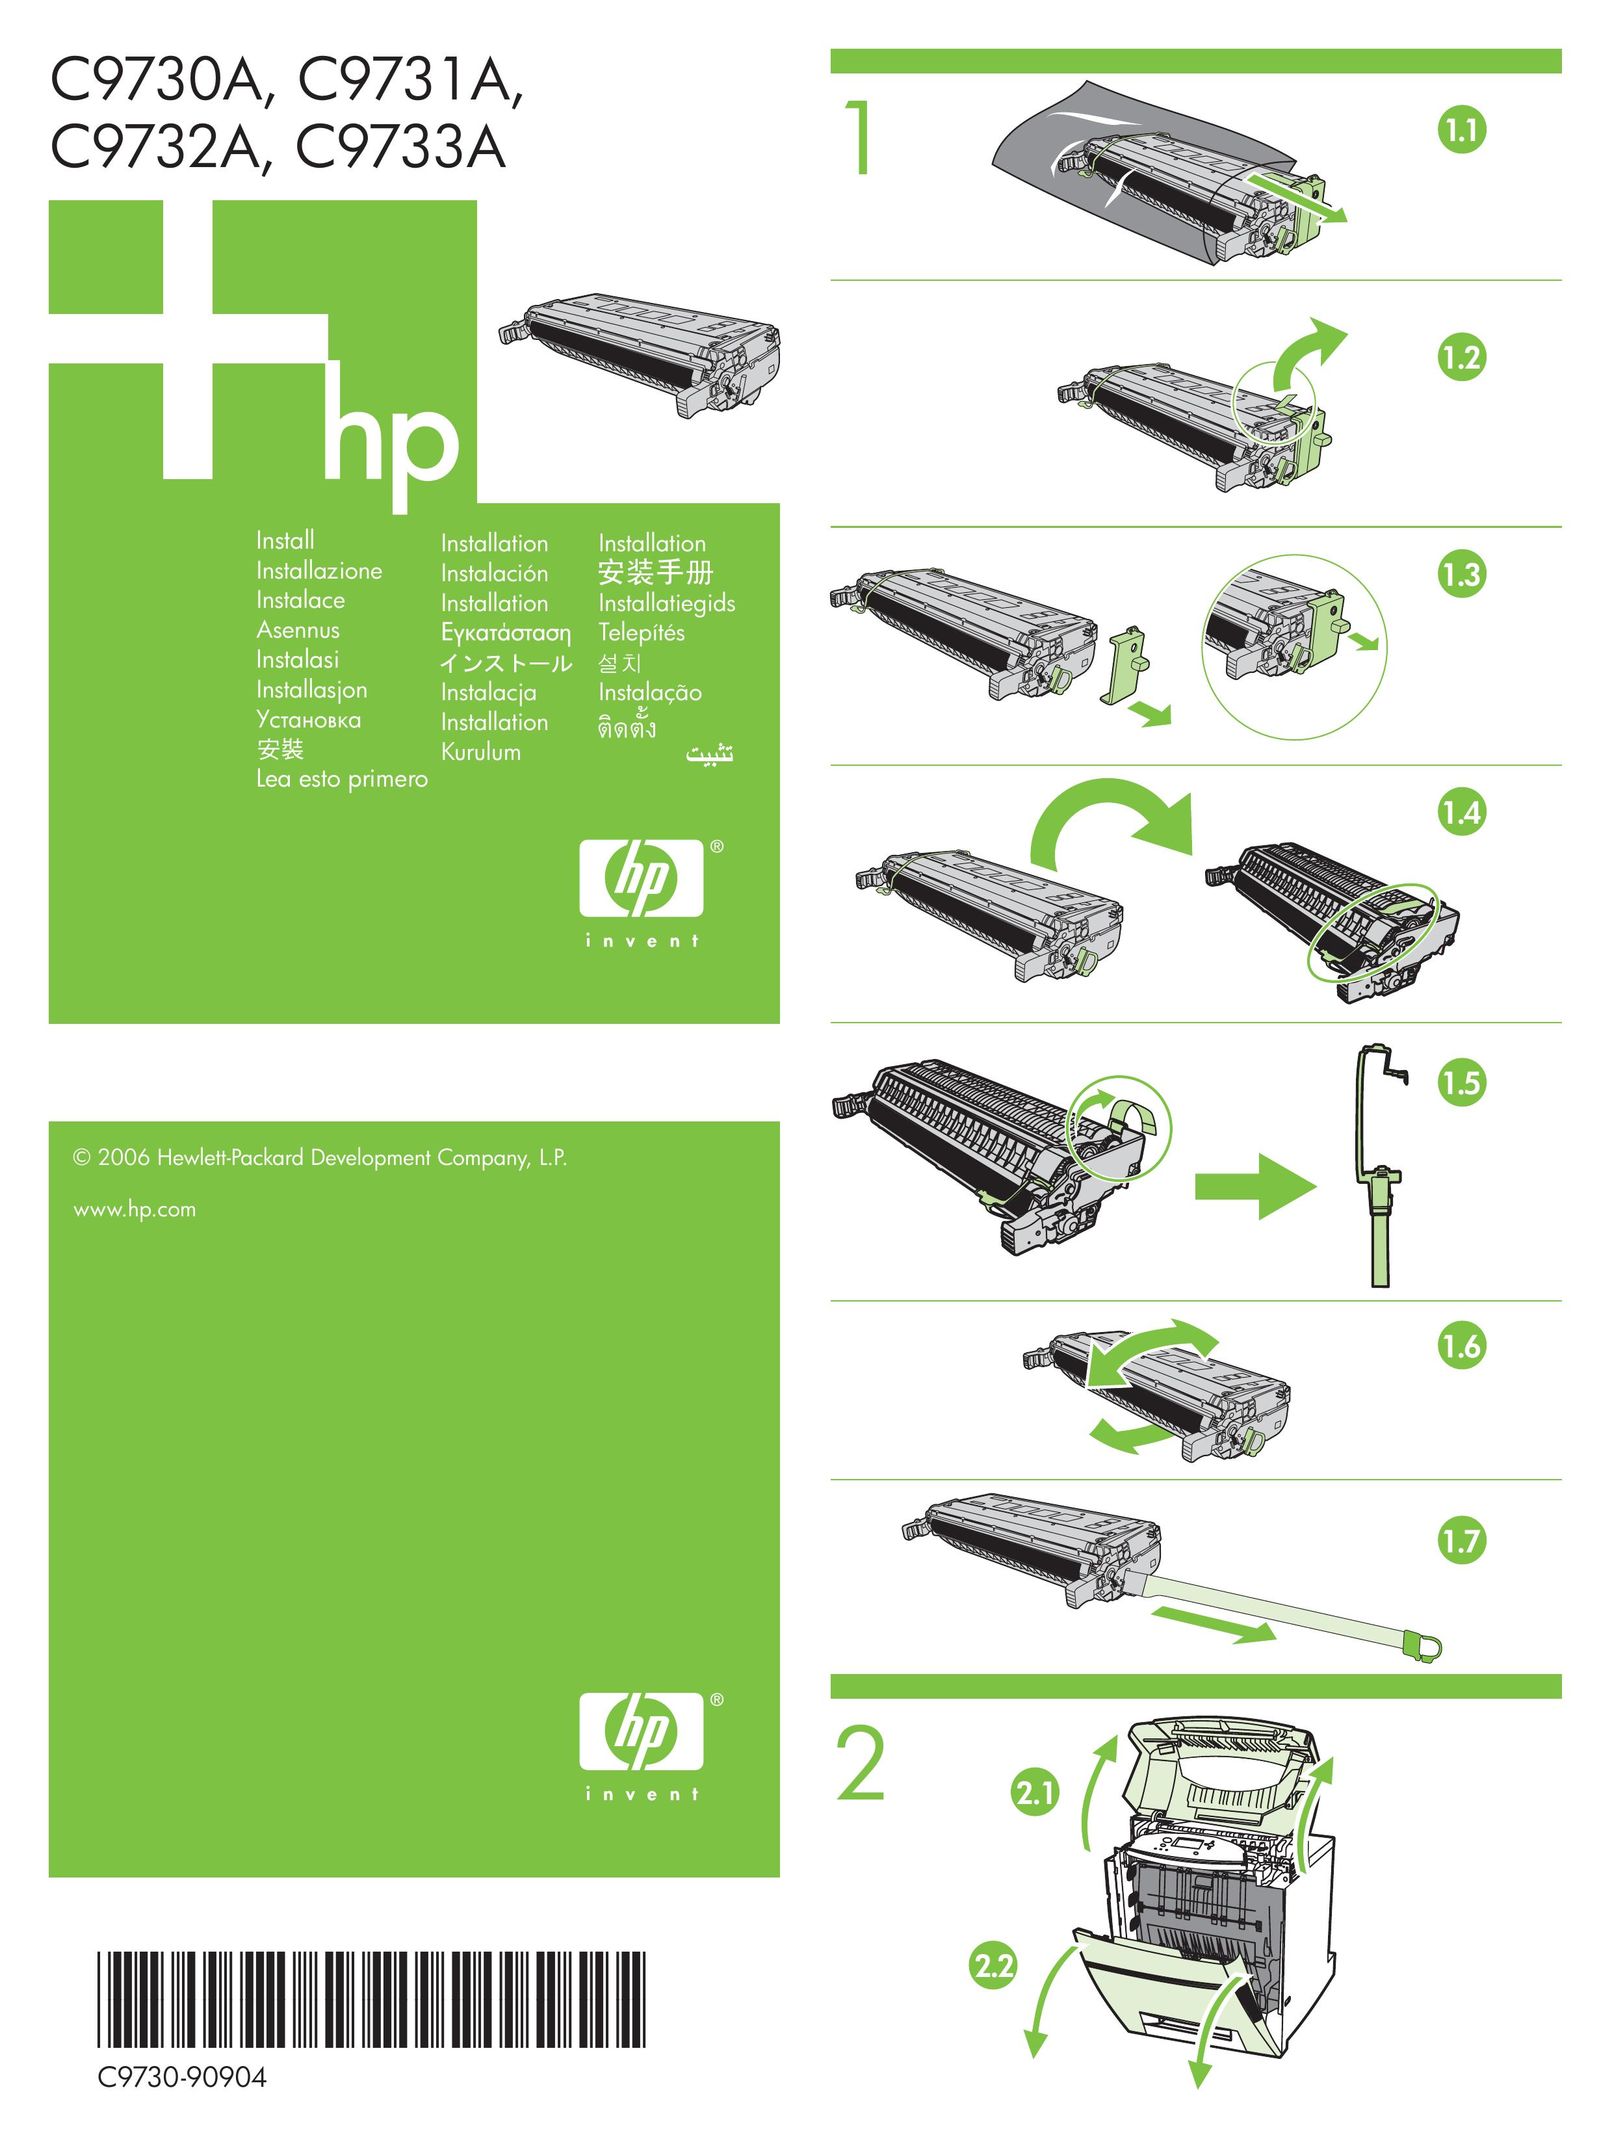 HP (Hewlett-Packard) C9731A Printer Accessories User Manual